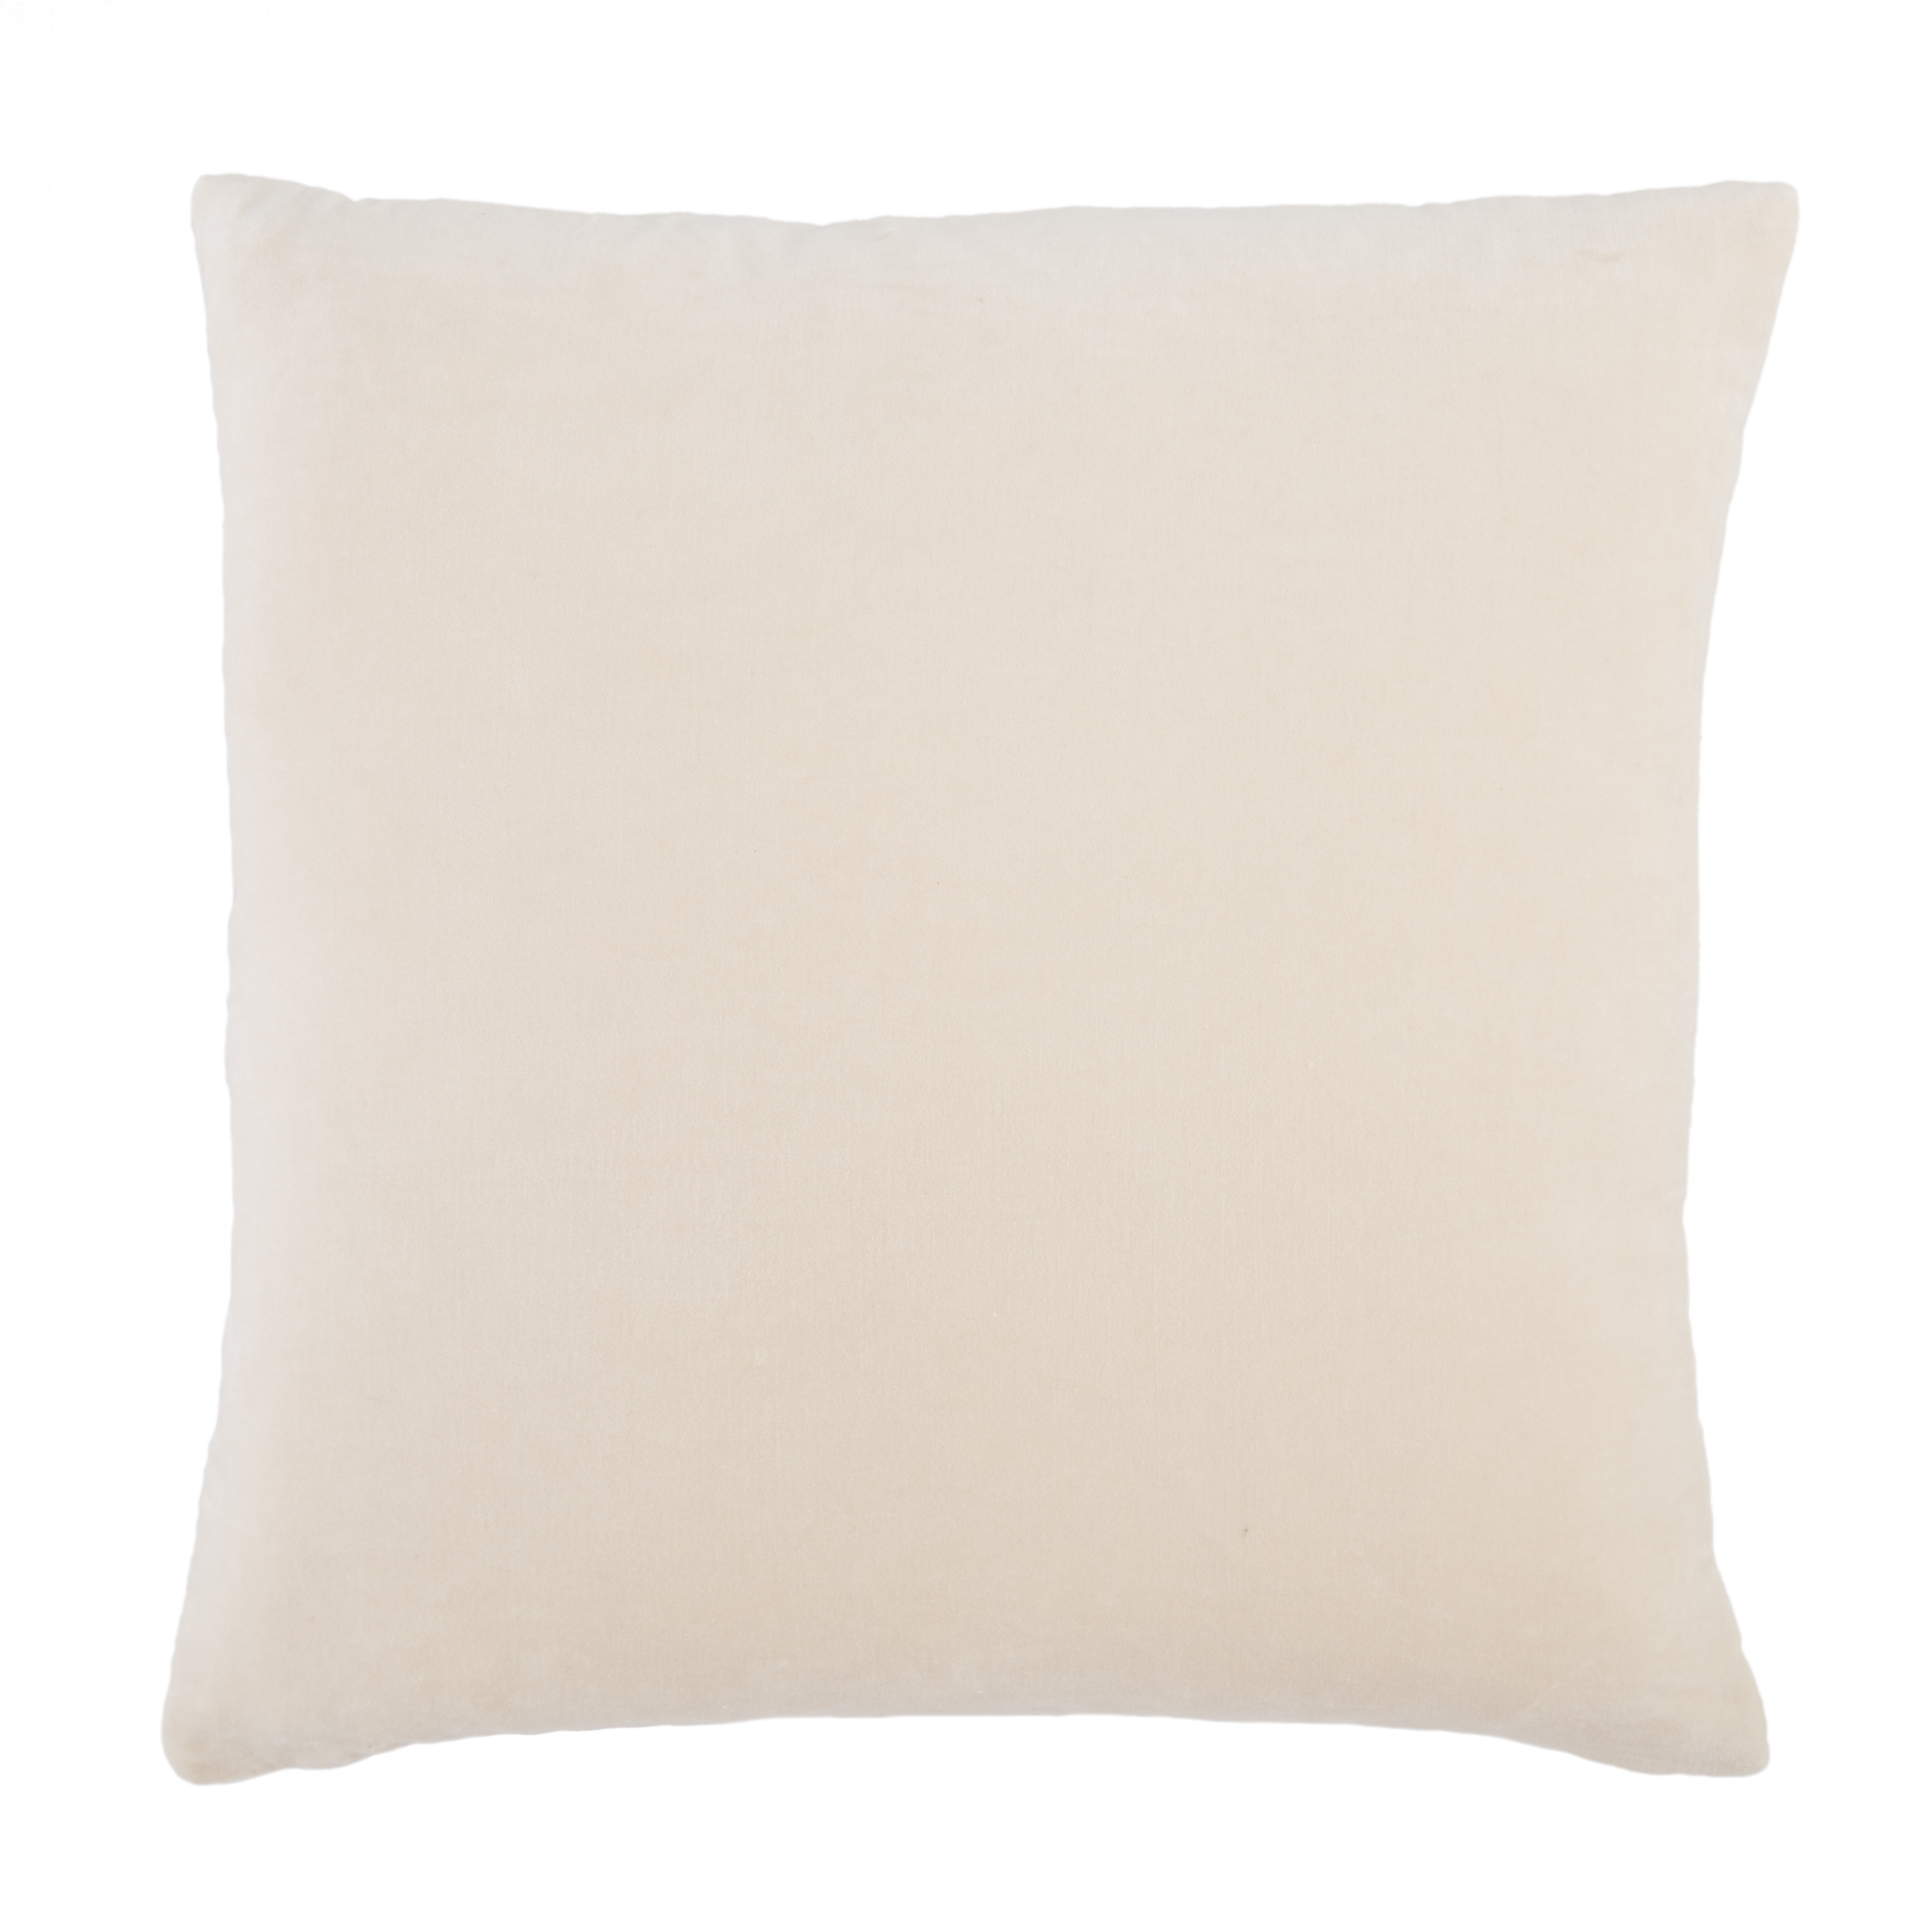 Design (US) Beige 22"X22" Pillow - Image 1